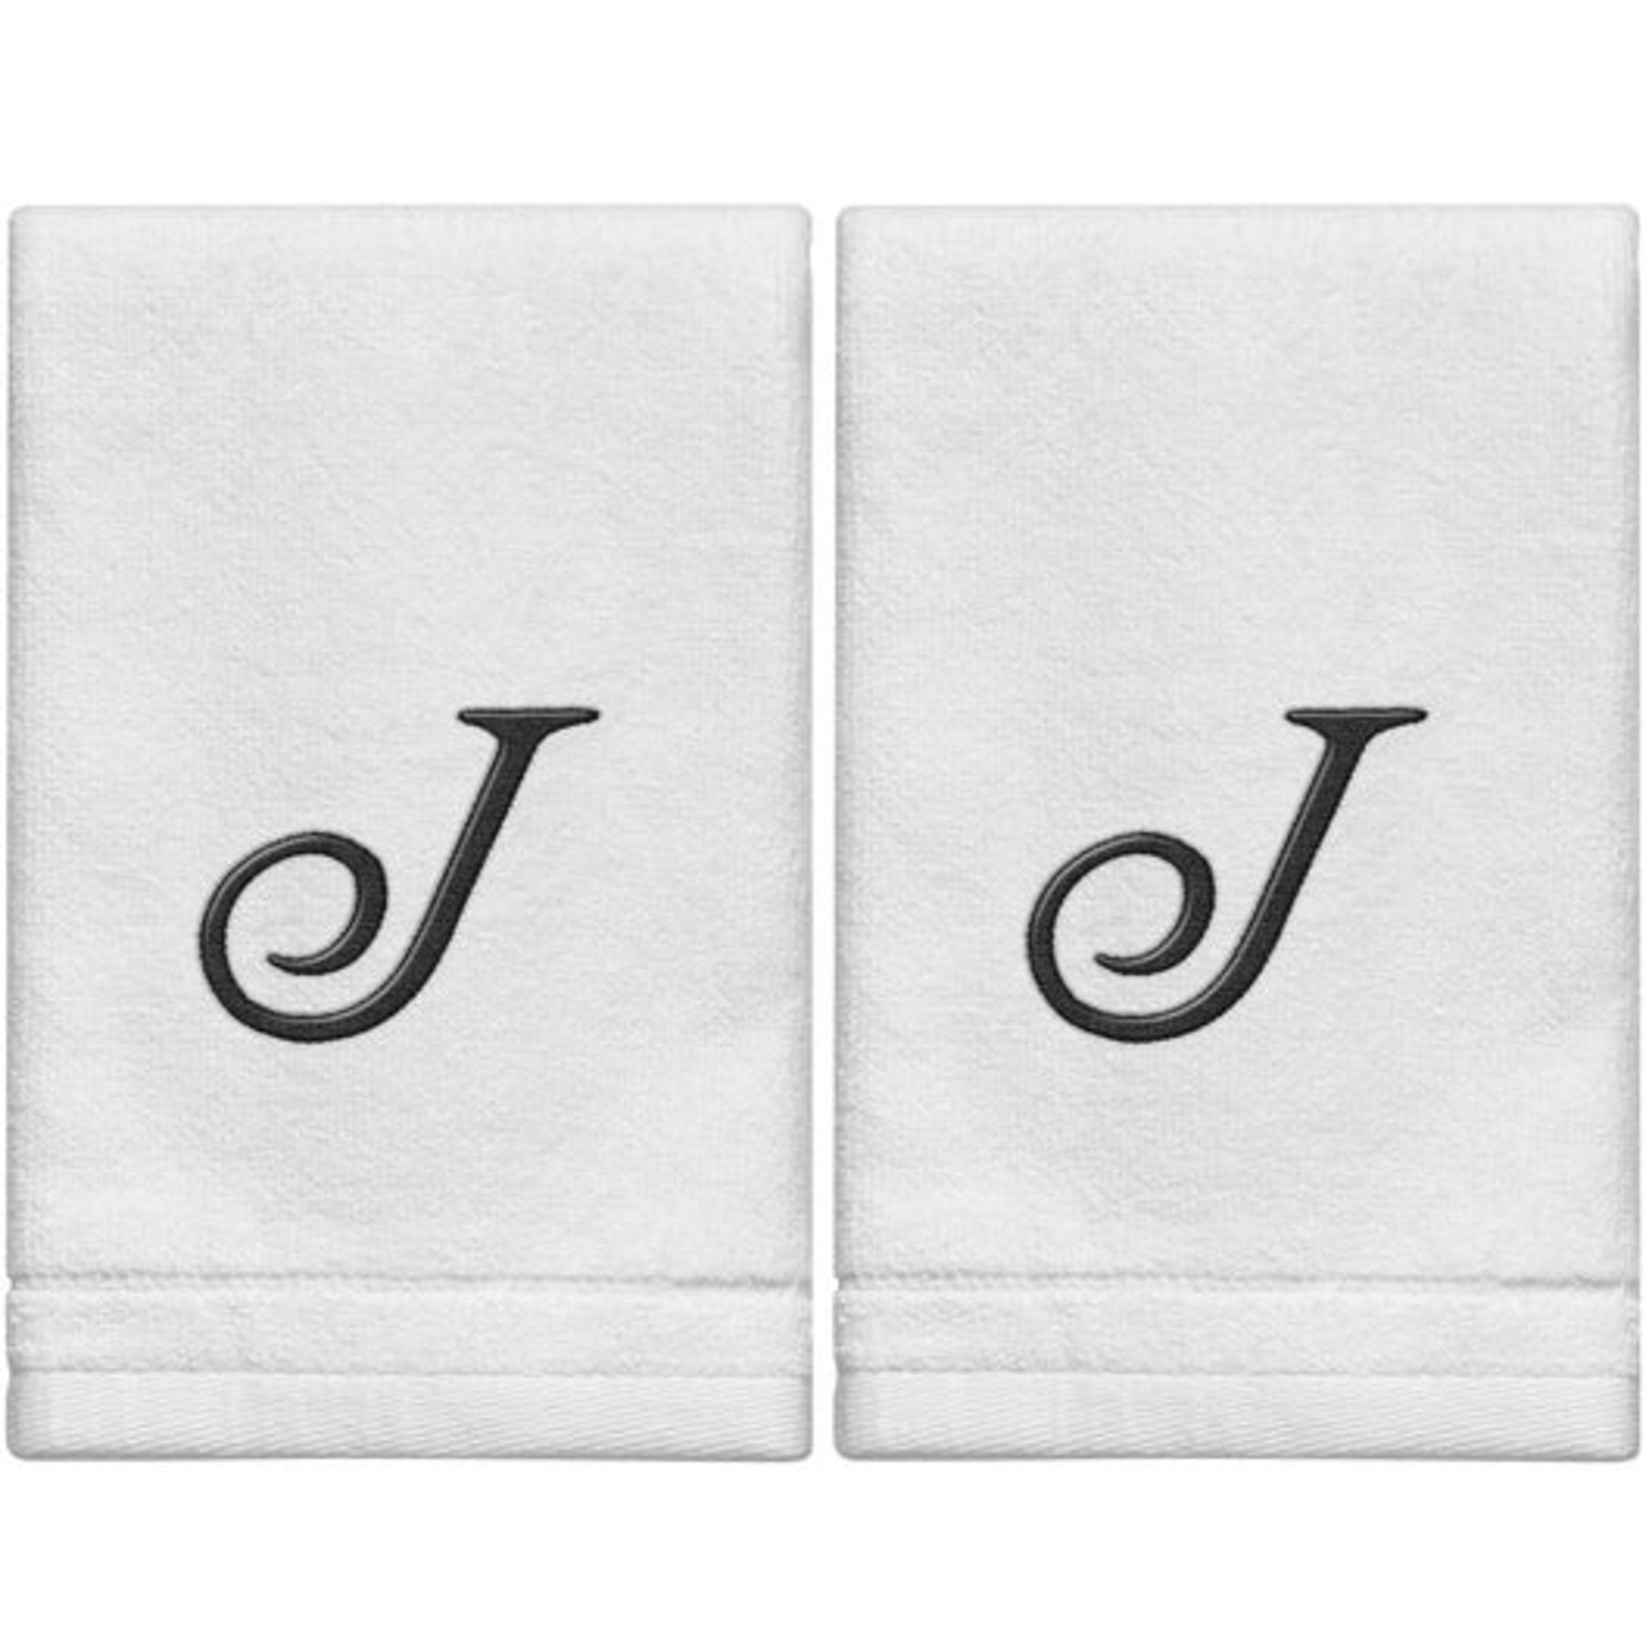 MWJ-07199 J - Cotton velour monogram towel (2 Pack) - White/Black